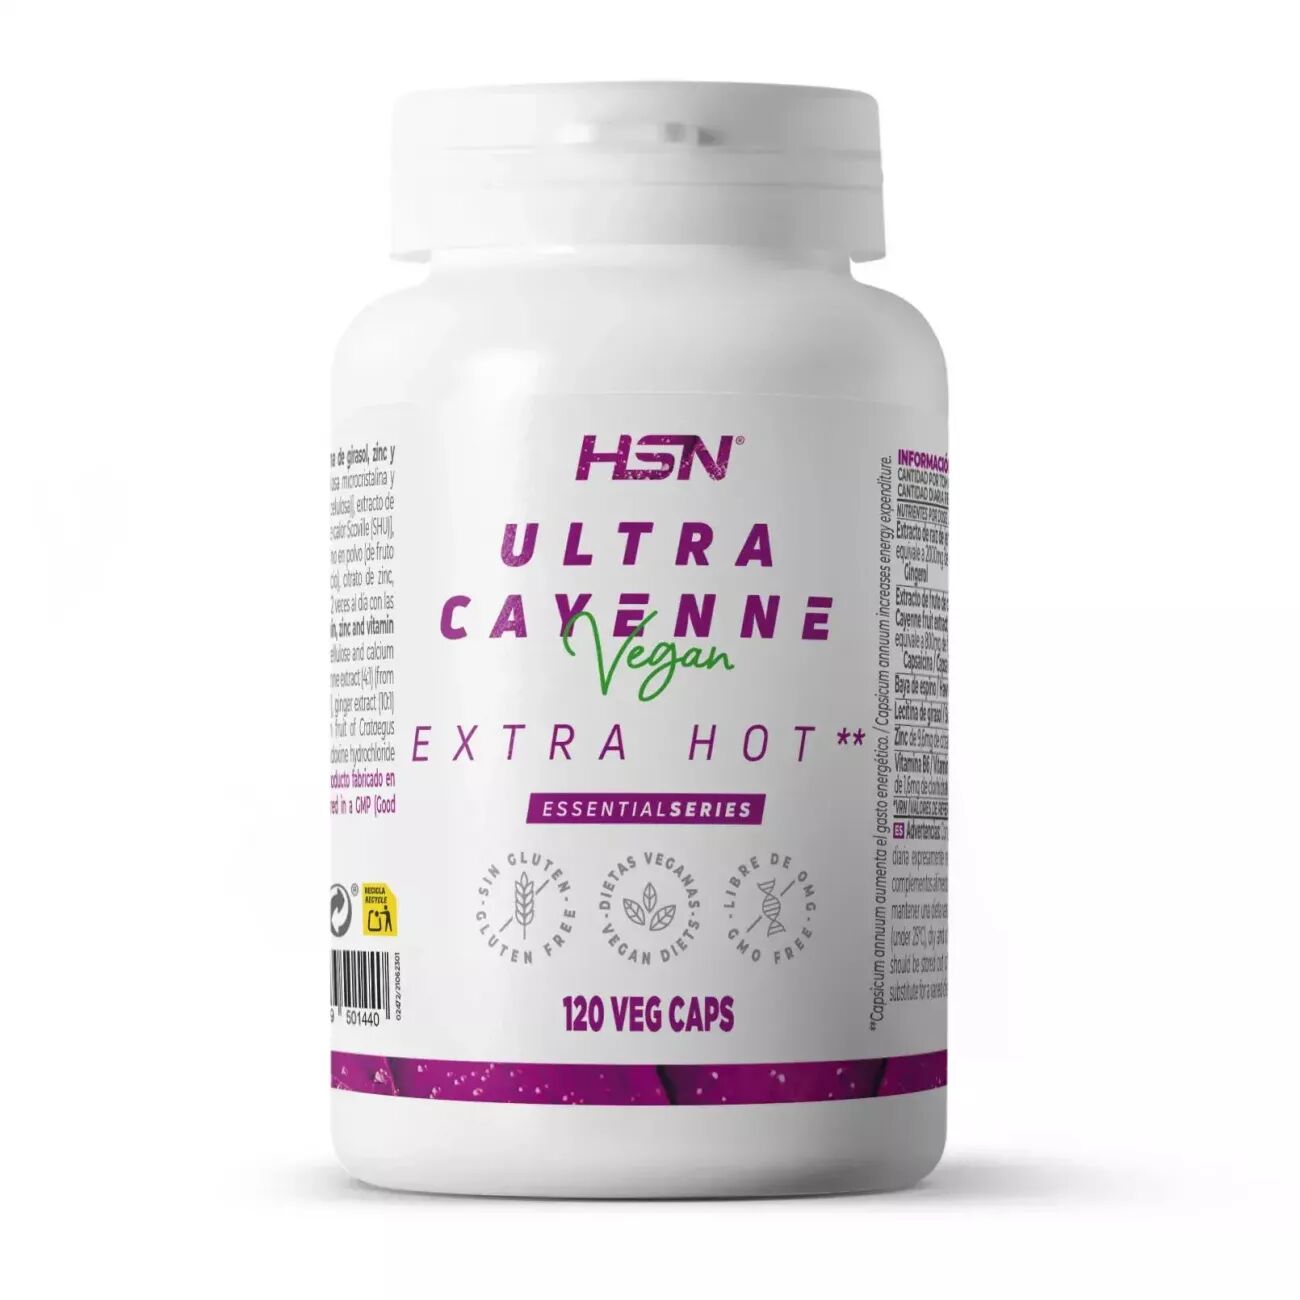 HSN Ultra cayenne extra hot*(2,25% capsaïcine) - 120 veg caps